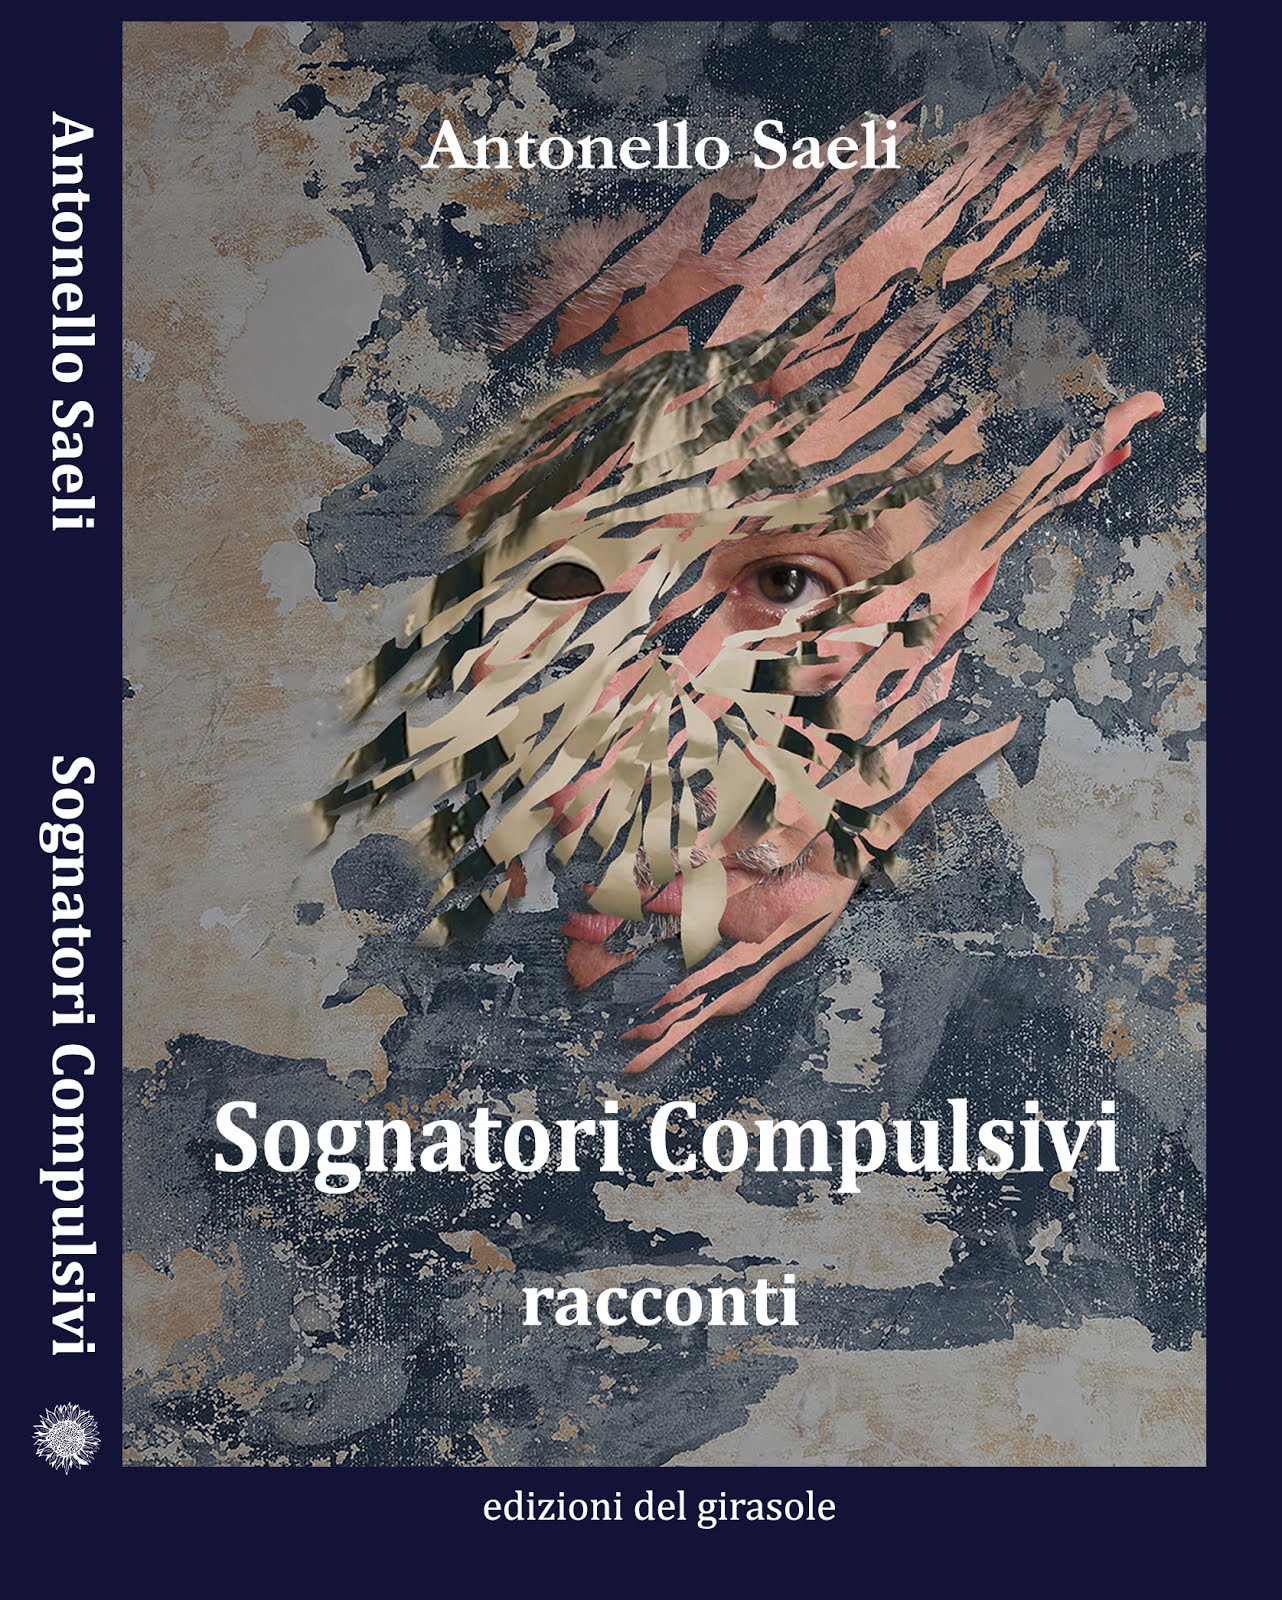 'Sognatori Compulsivi' - short stories